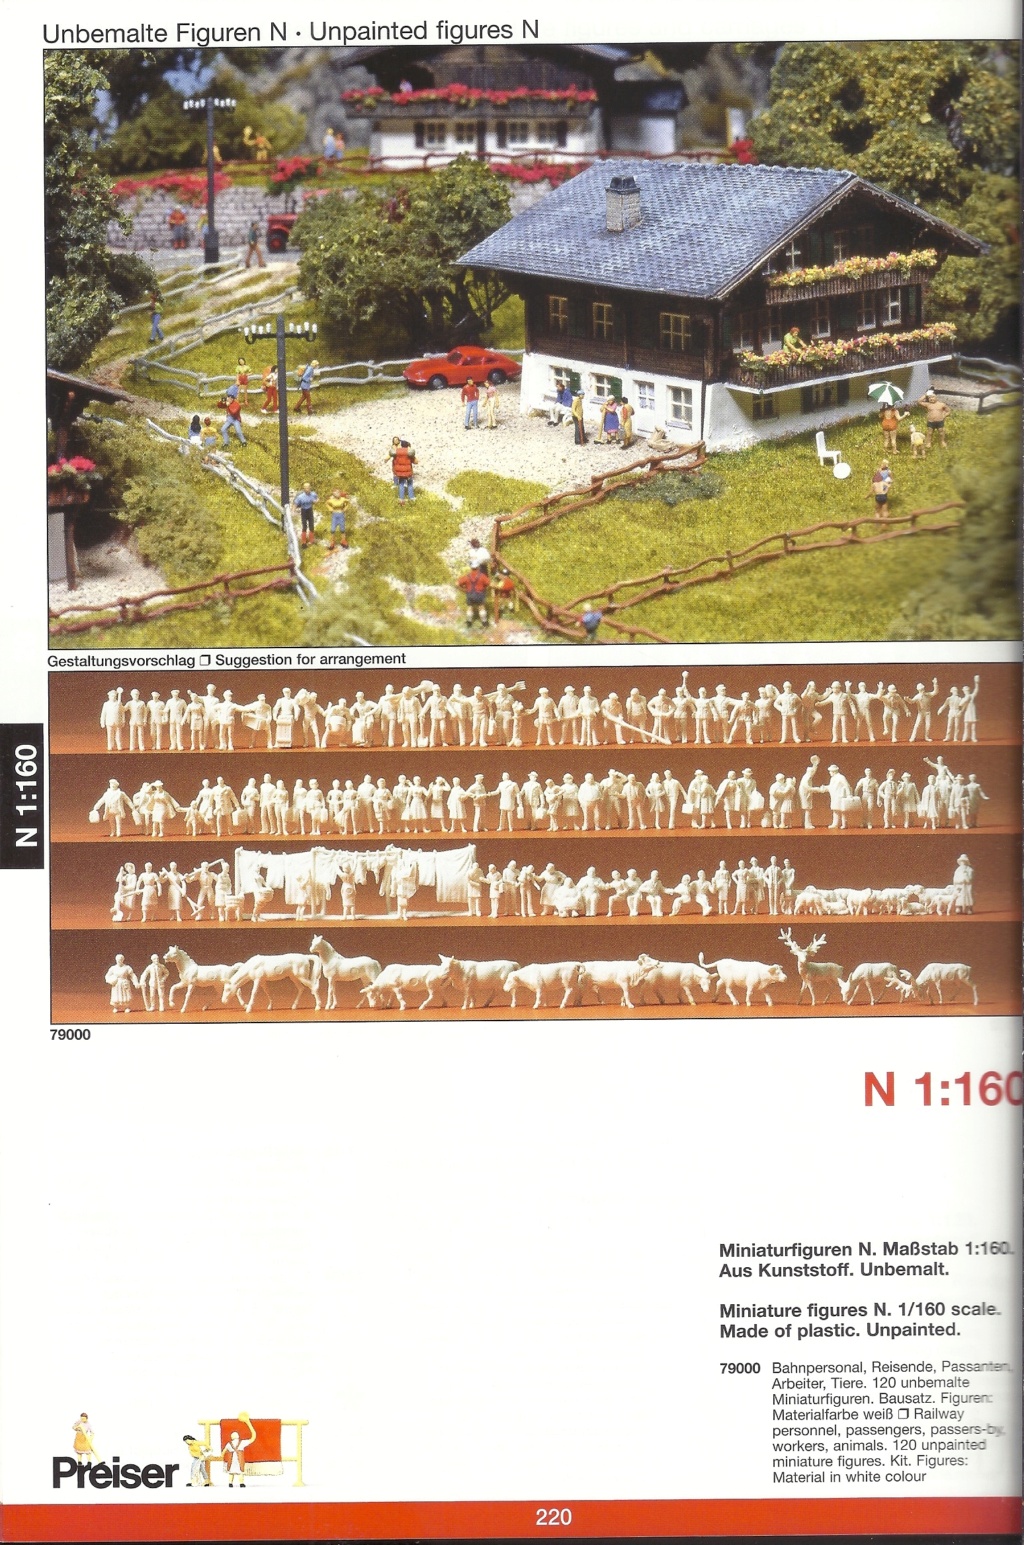 [PREISER 2007] Catalogue PK 24 2007 Preis864